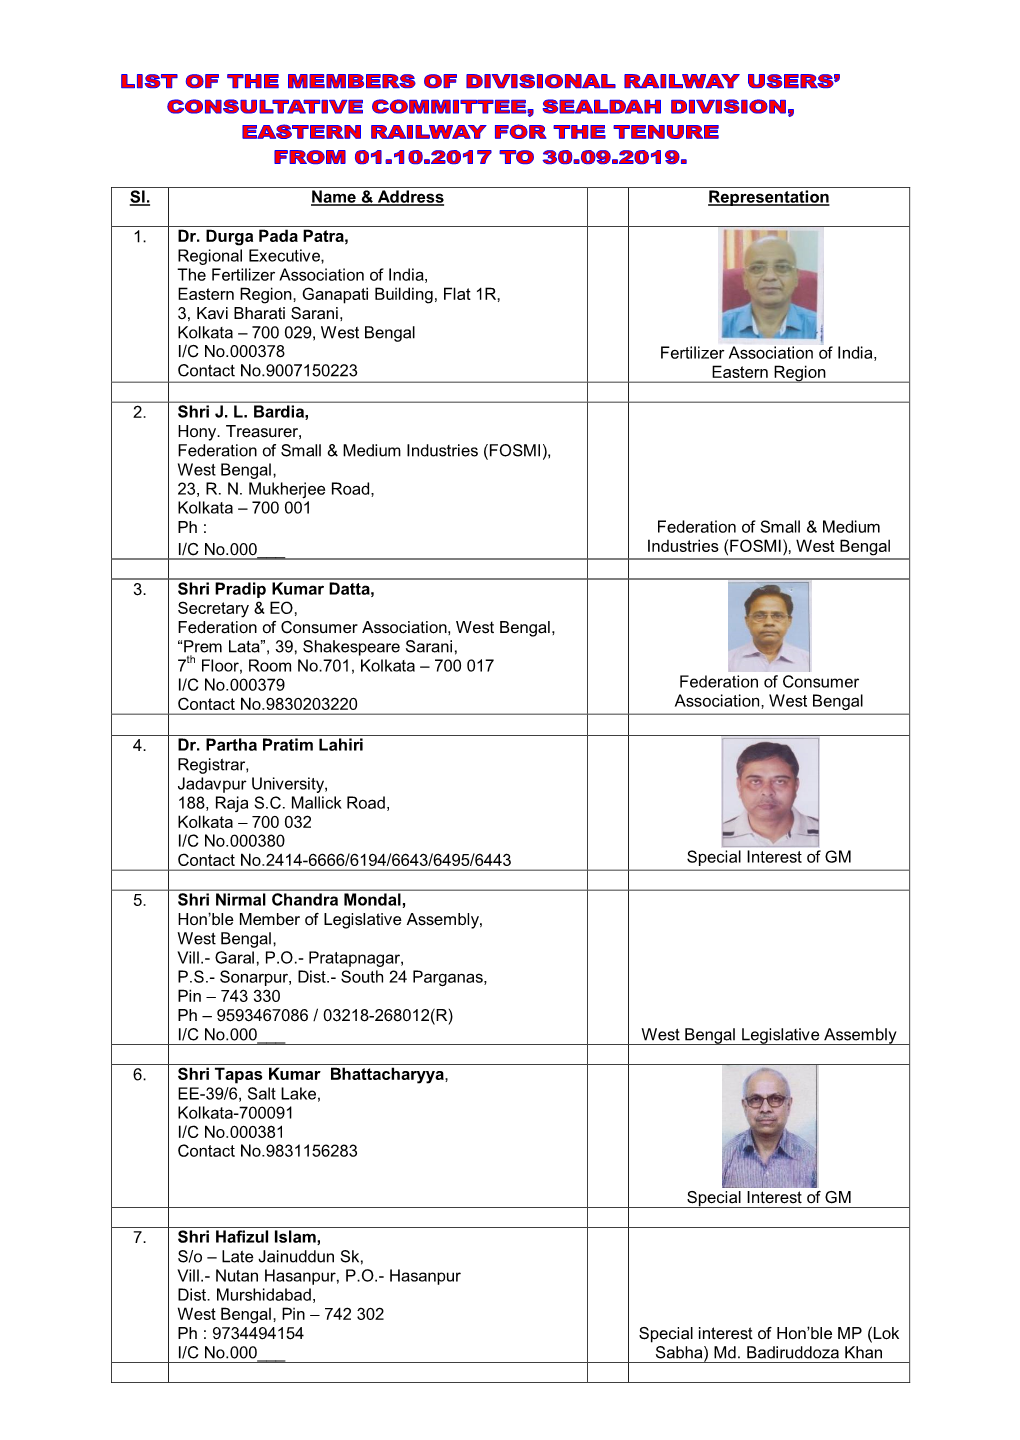 Sl. Name & Address Representation 1. Dr. Durga Pada Patra, Regional